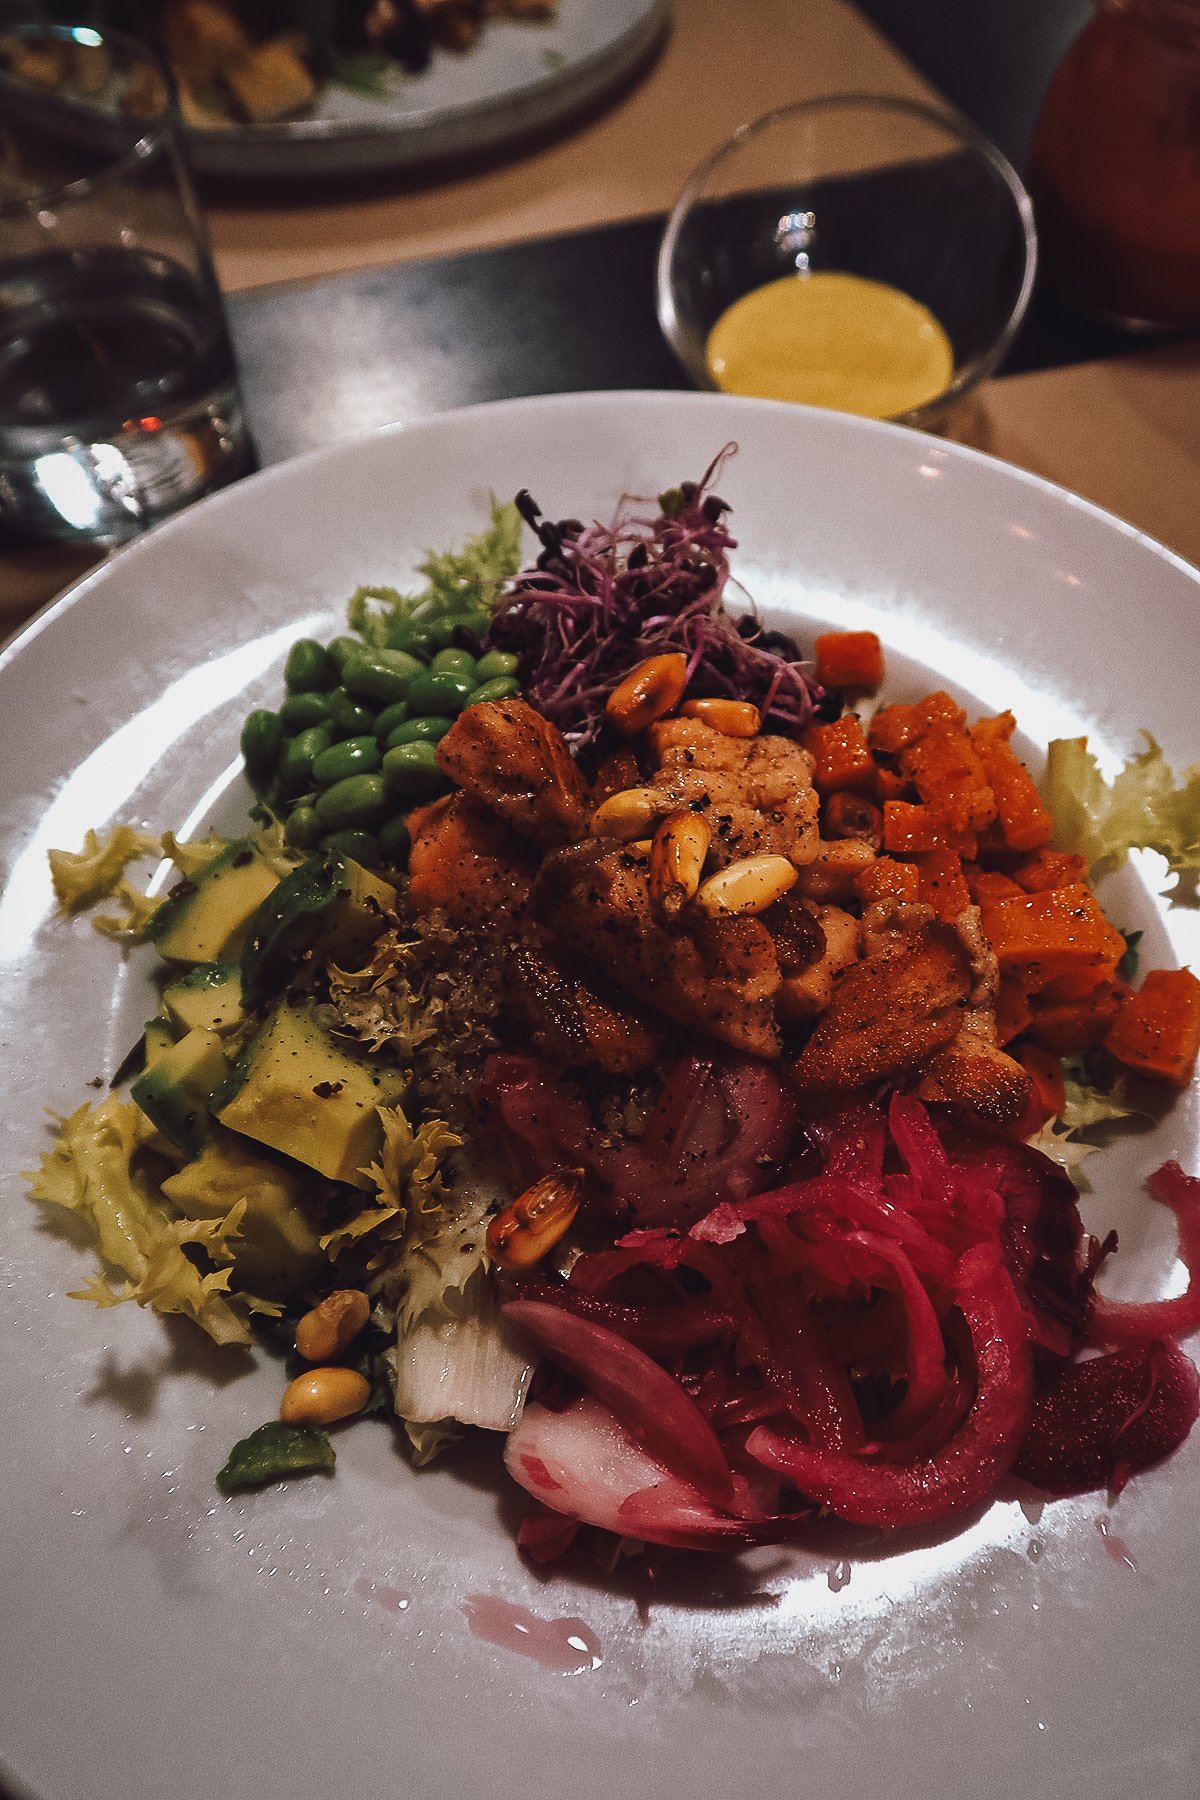 Salad at a restaurant in Barcelona